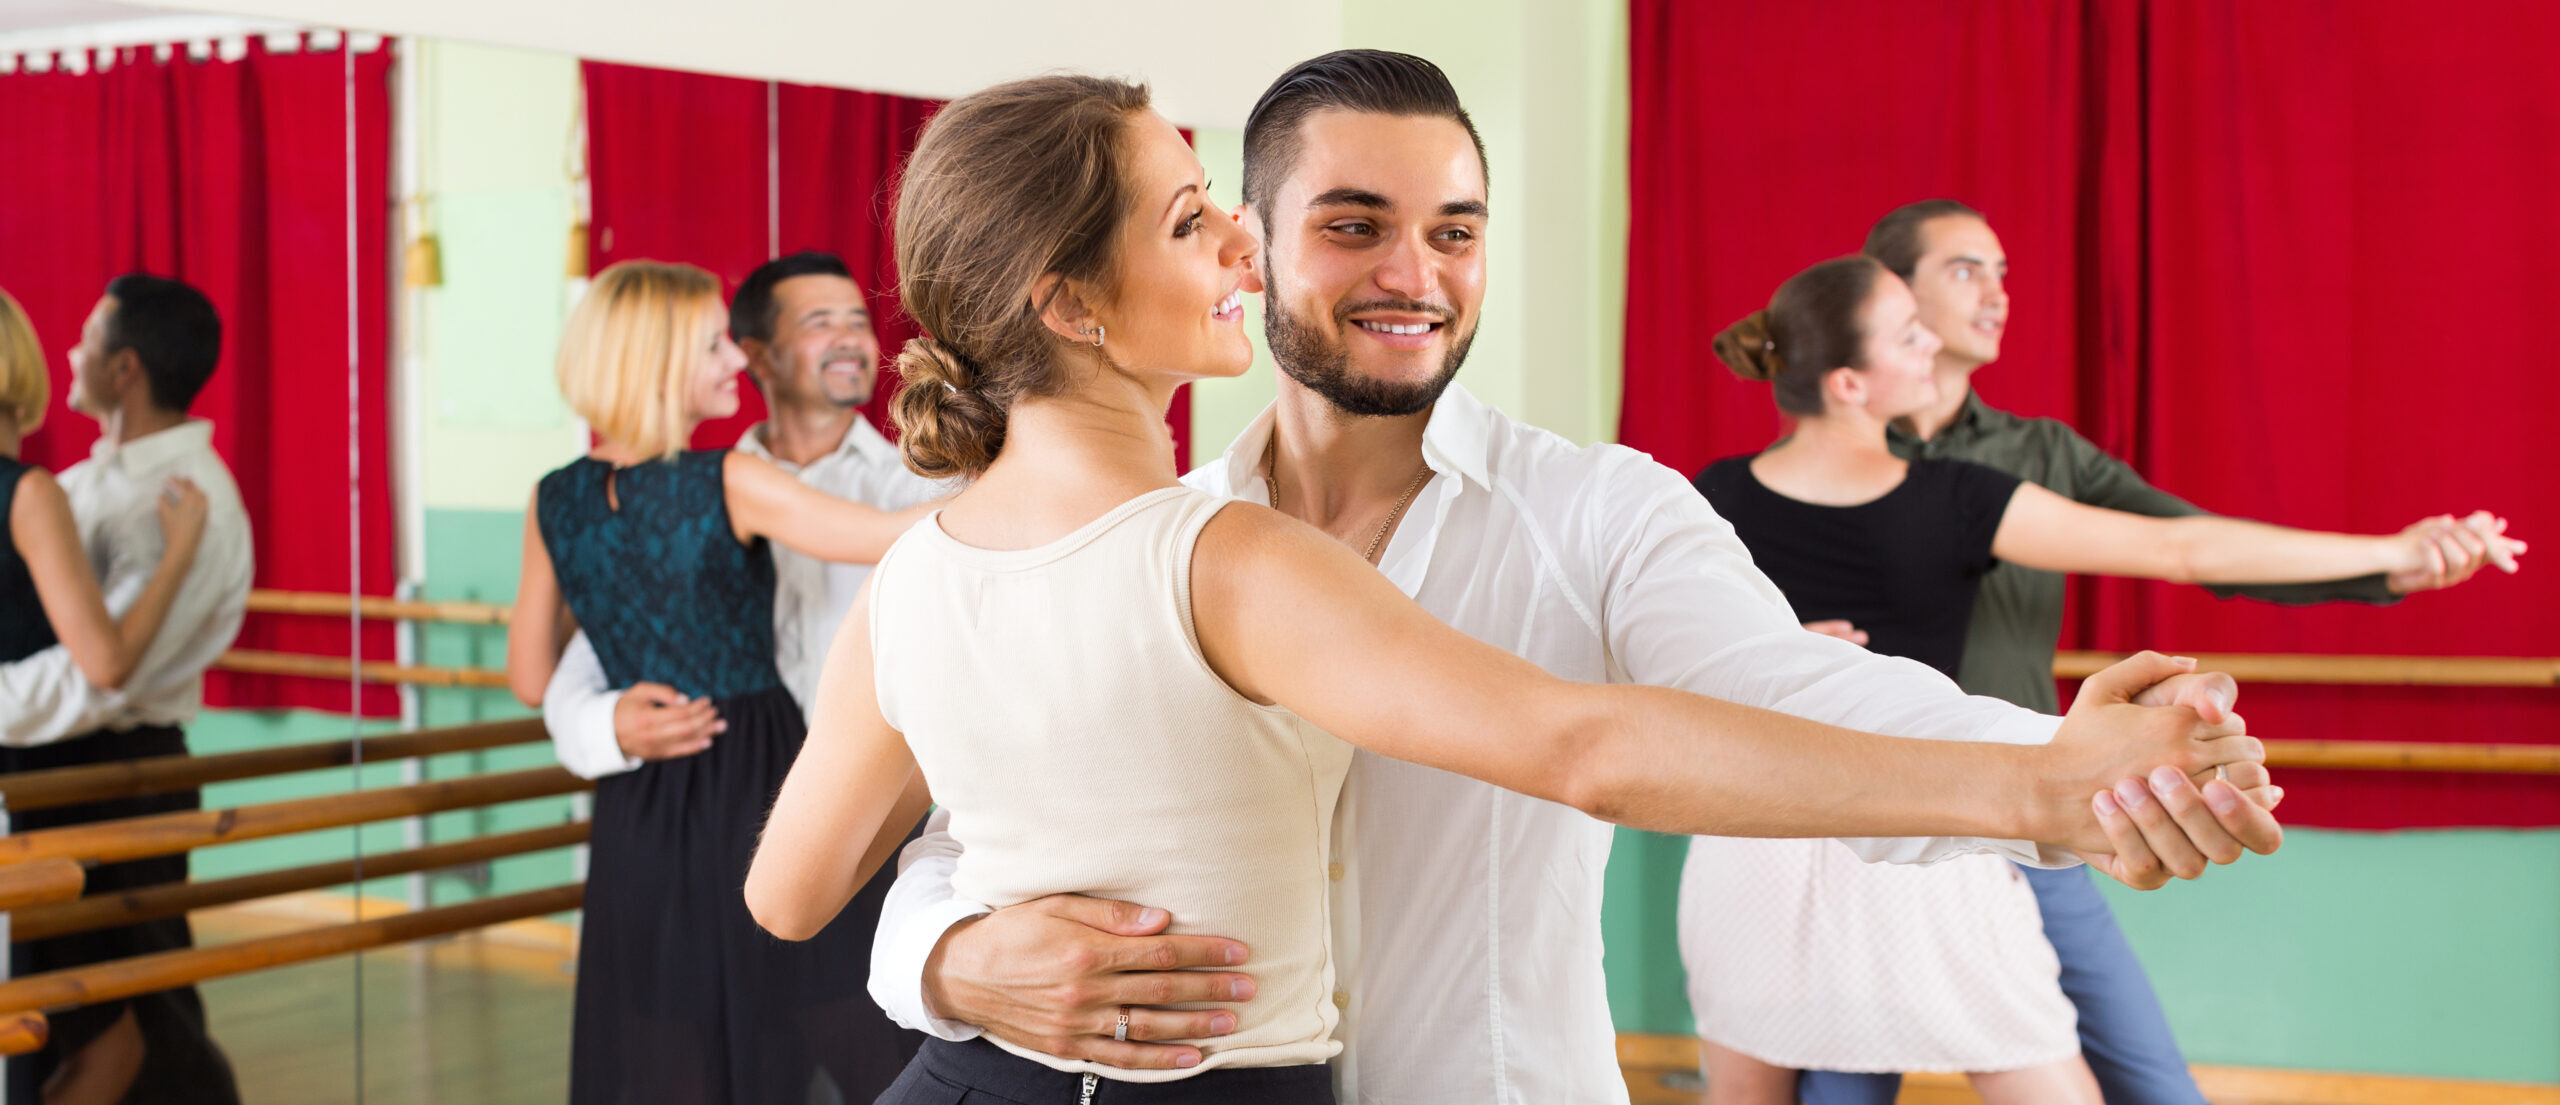 young couple ballroom dancing in studio